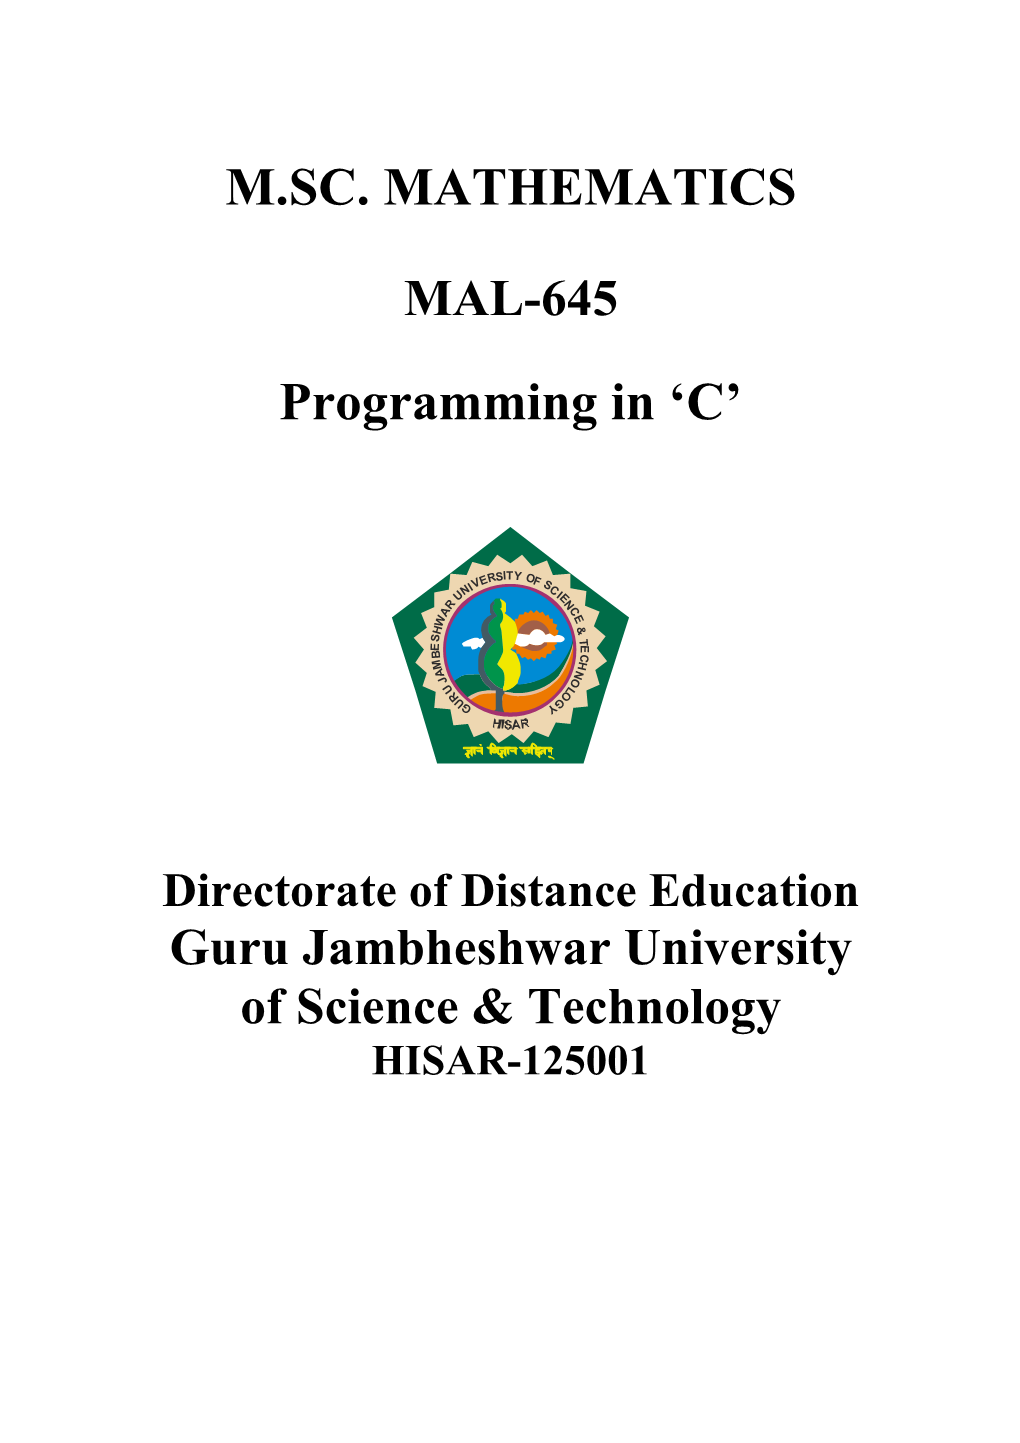 M.SC. MATHEMATICS Programming In